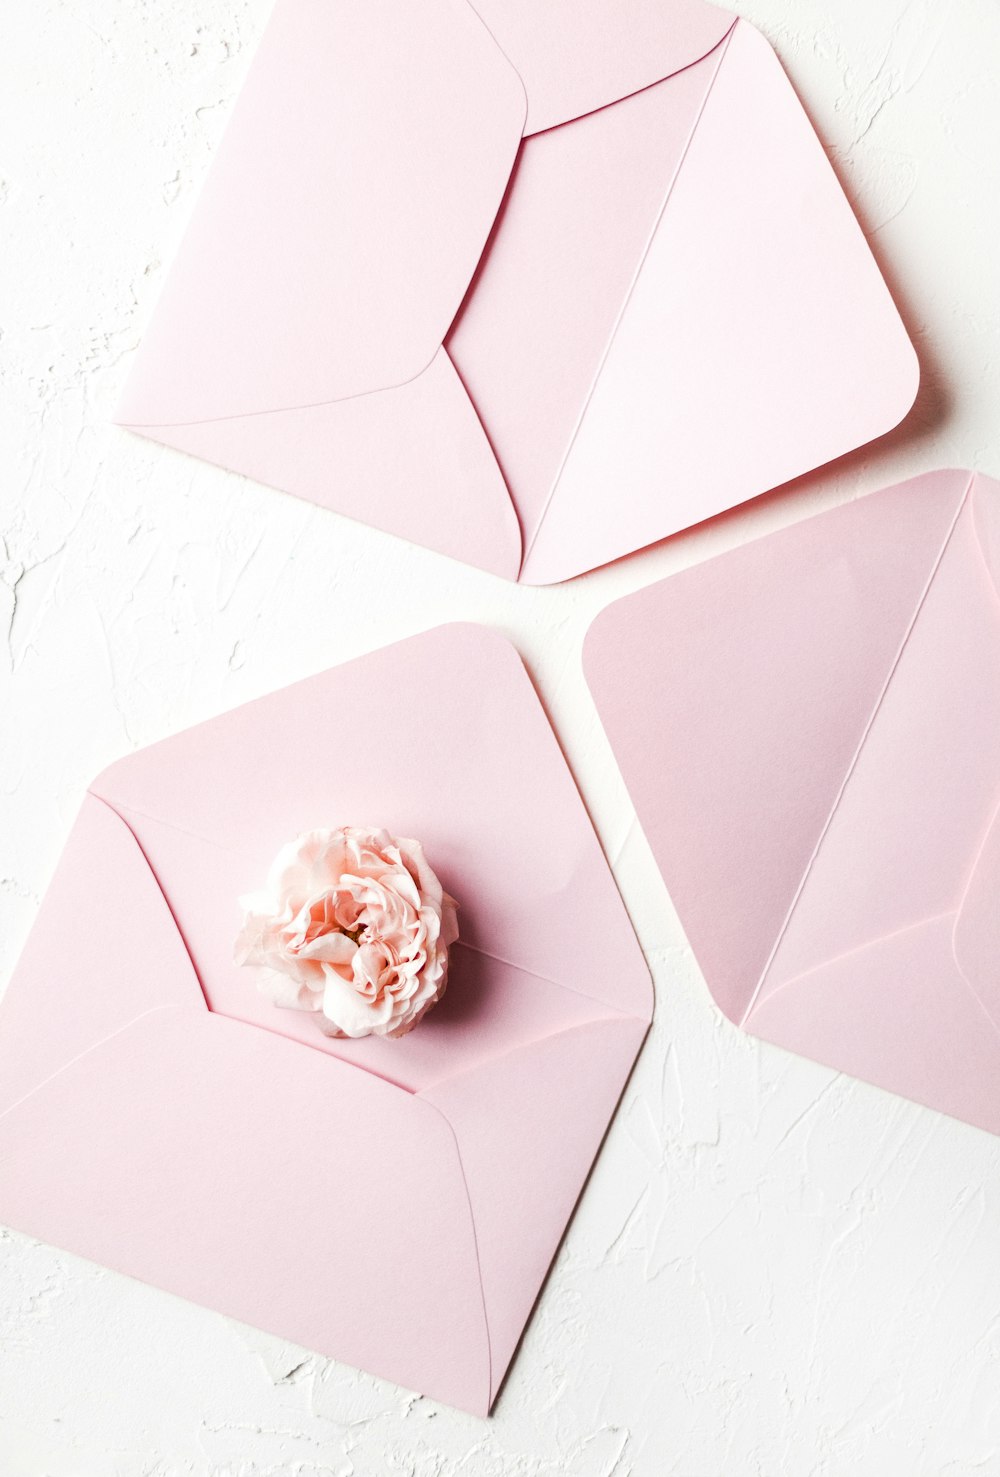 three pink envelopes